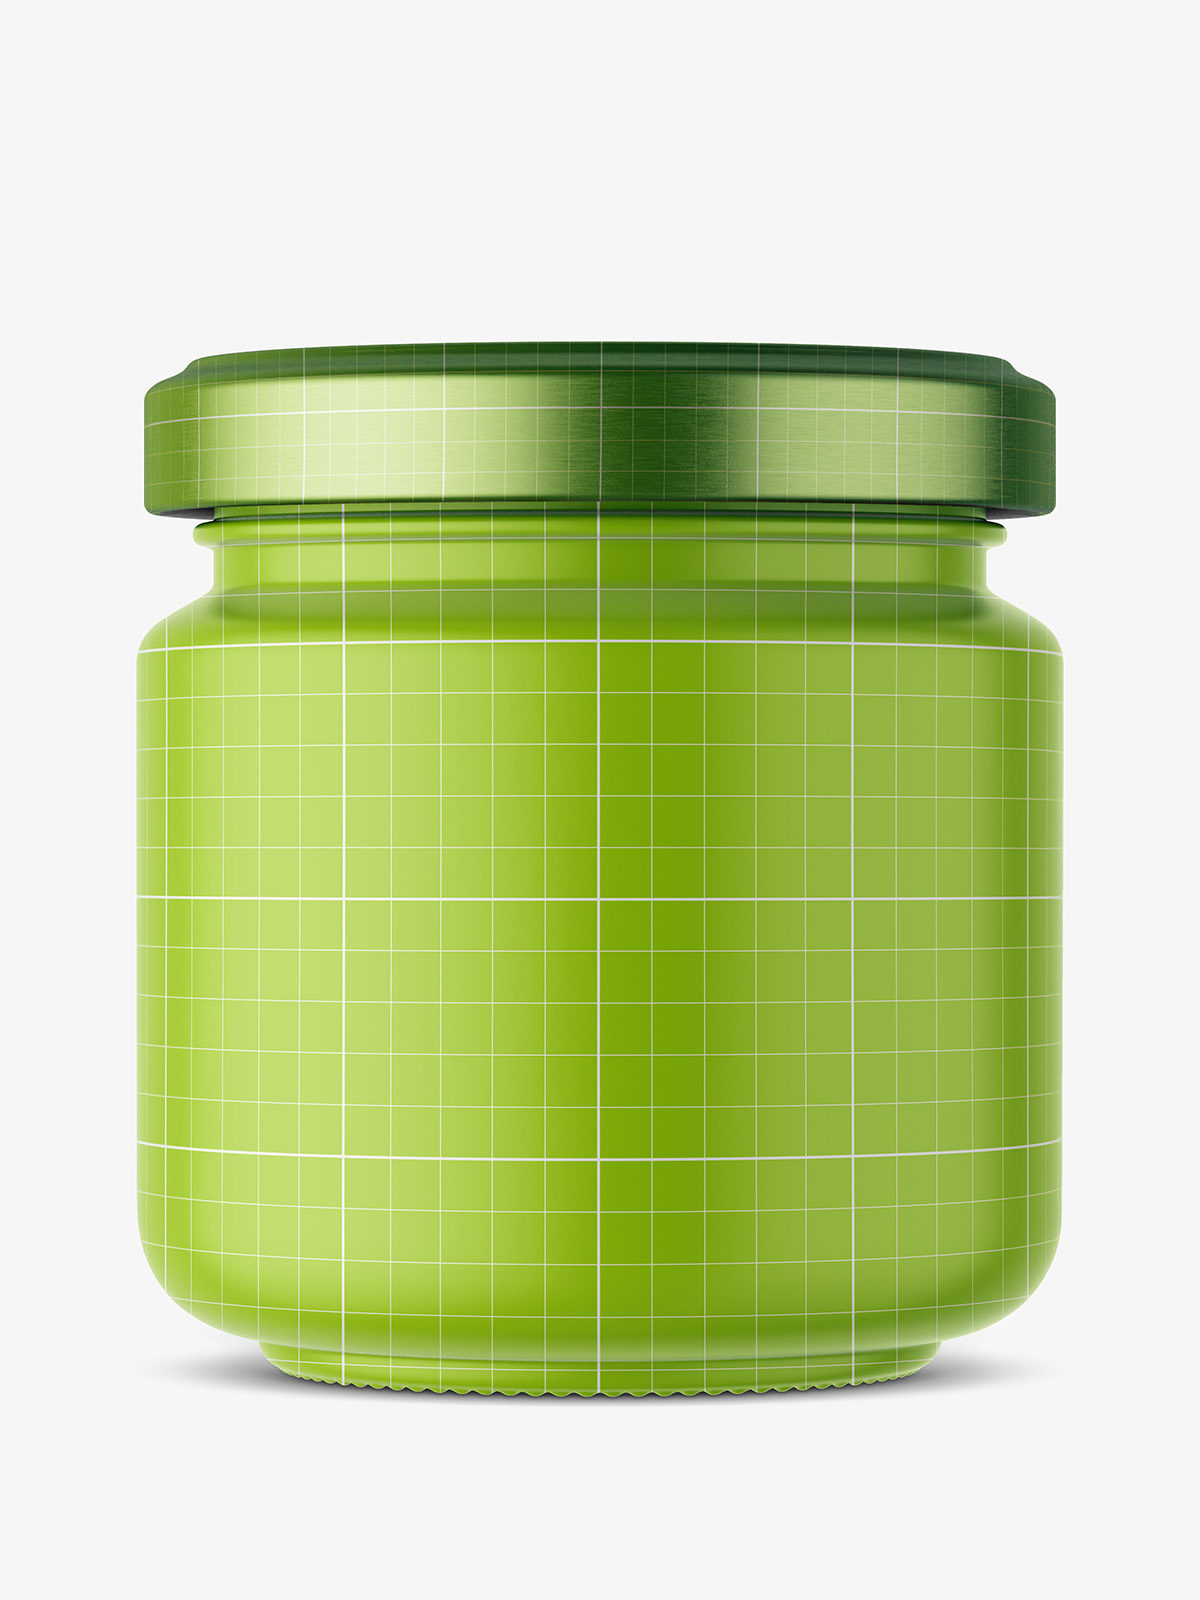 Download Tartar sauce jar mockup - Smarty Mockups